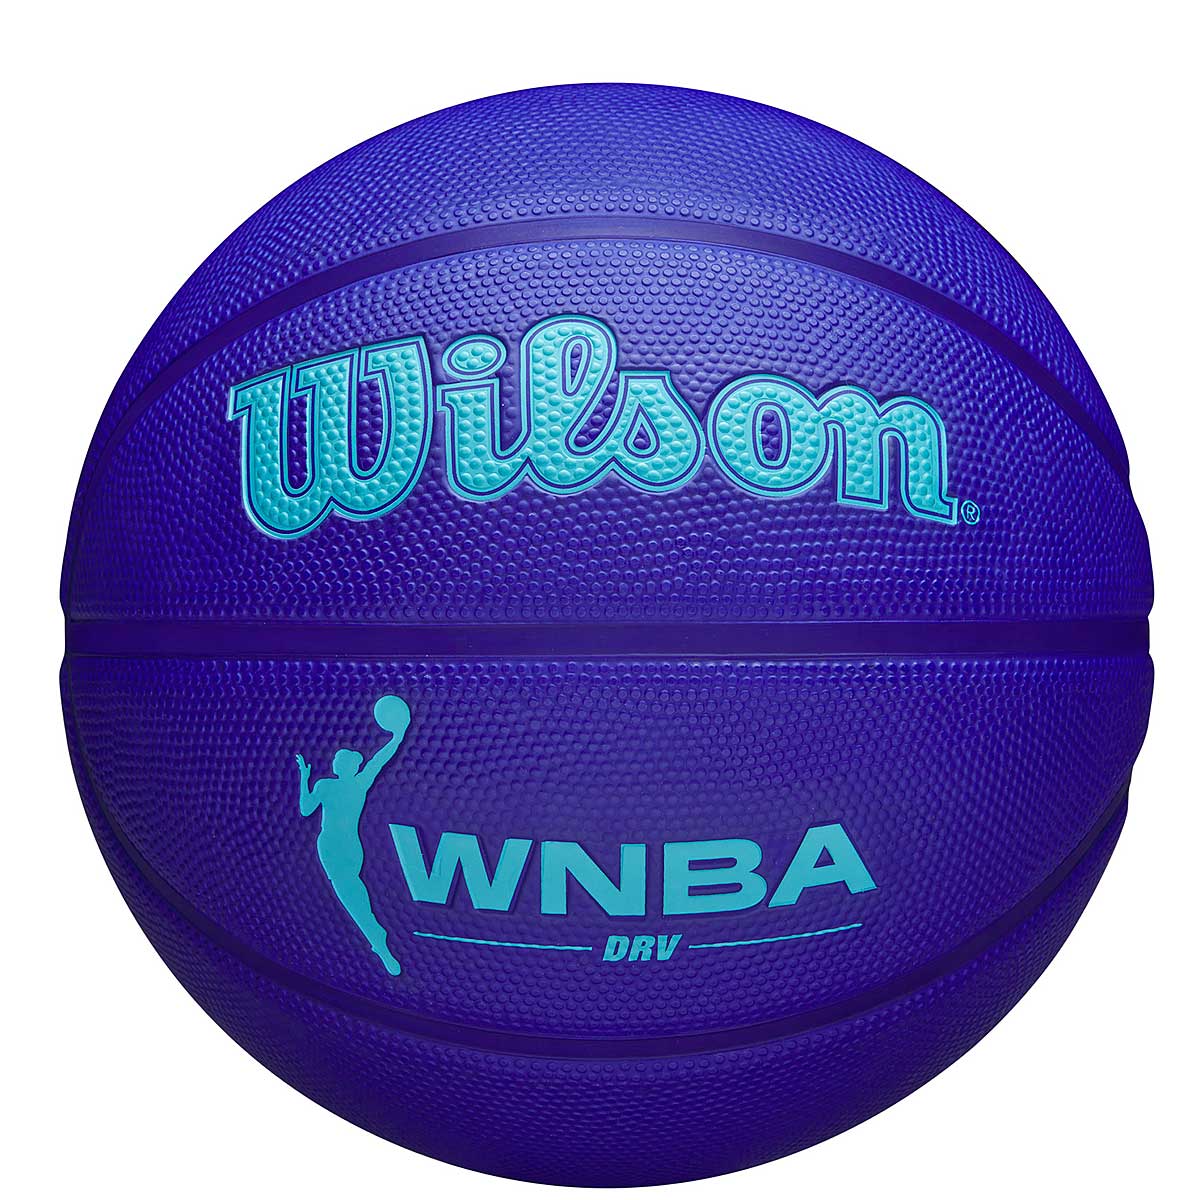 Image of Wilson Wnba Drv Basketball Purple, Silver